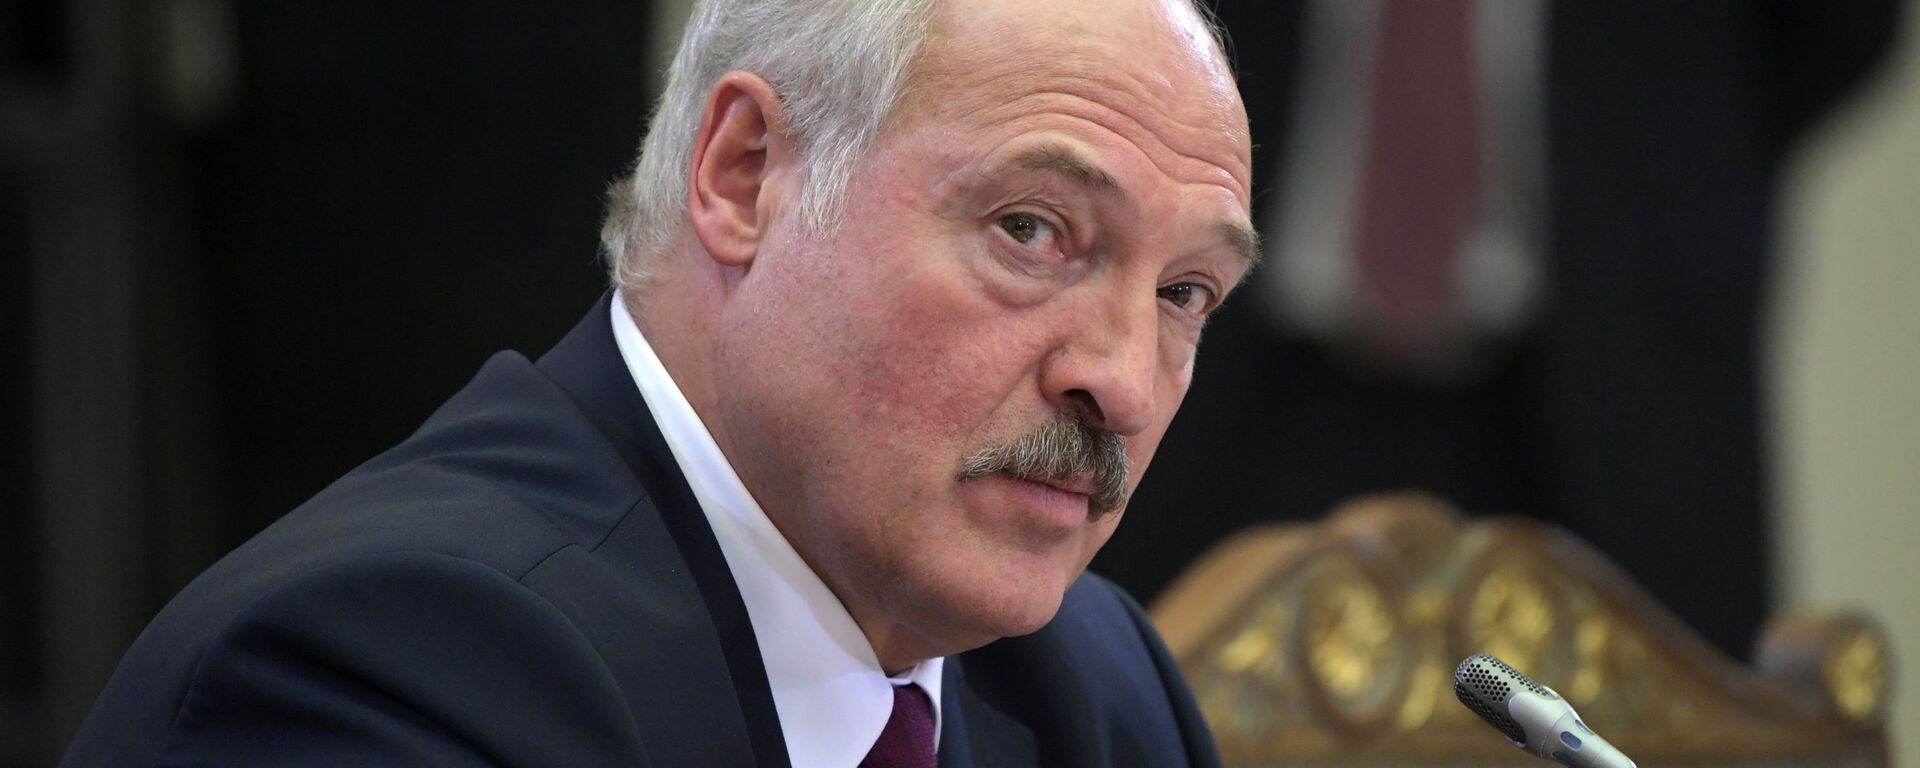 Президент Беларуси Александр Лукашенко - Sputnik Latvija, 1920, 25.05.2021